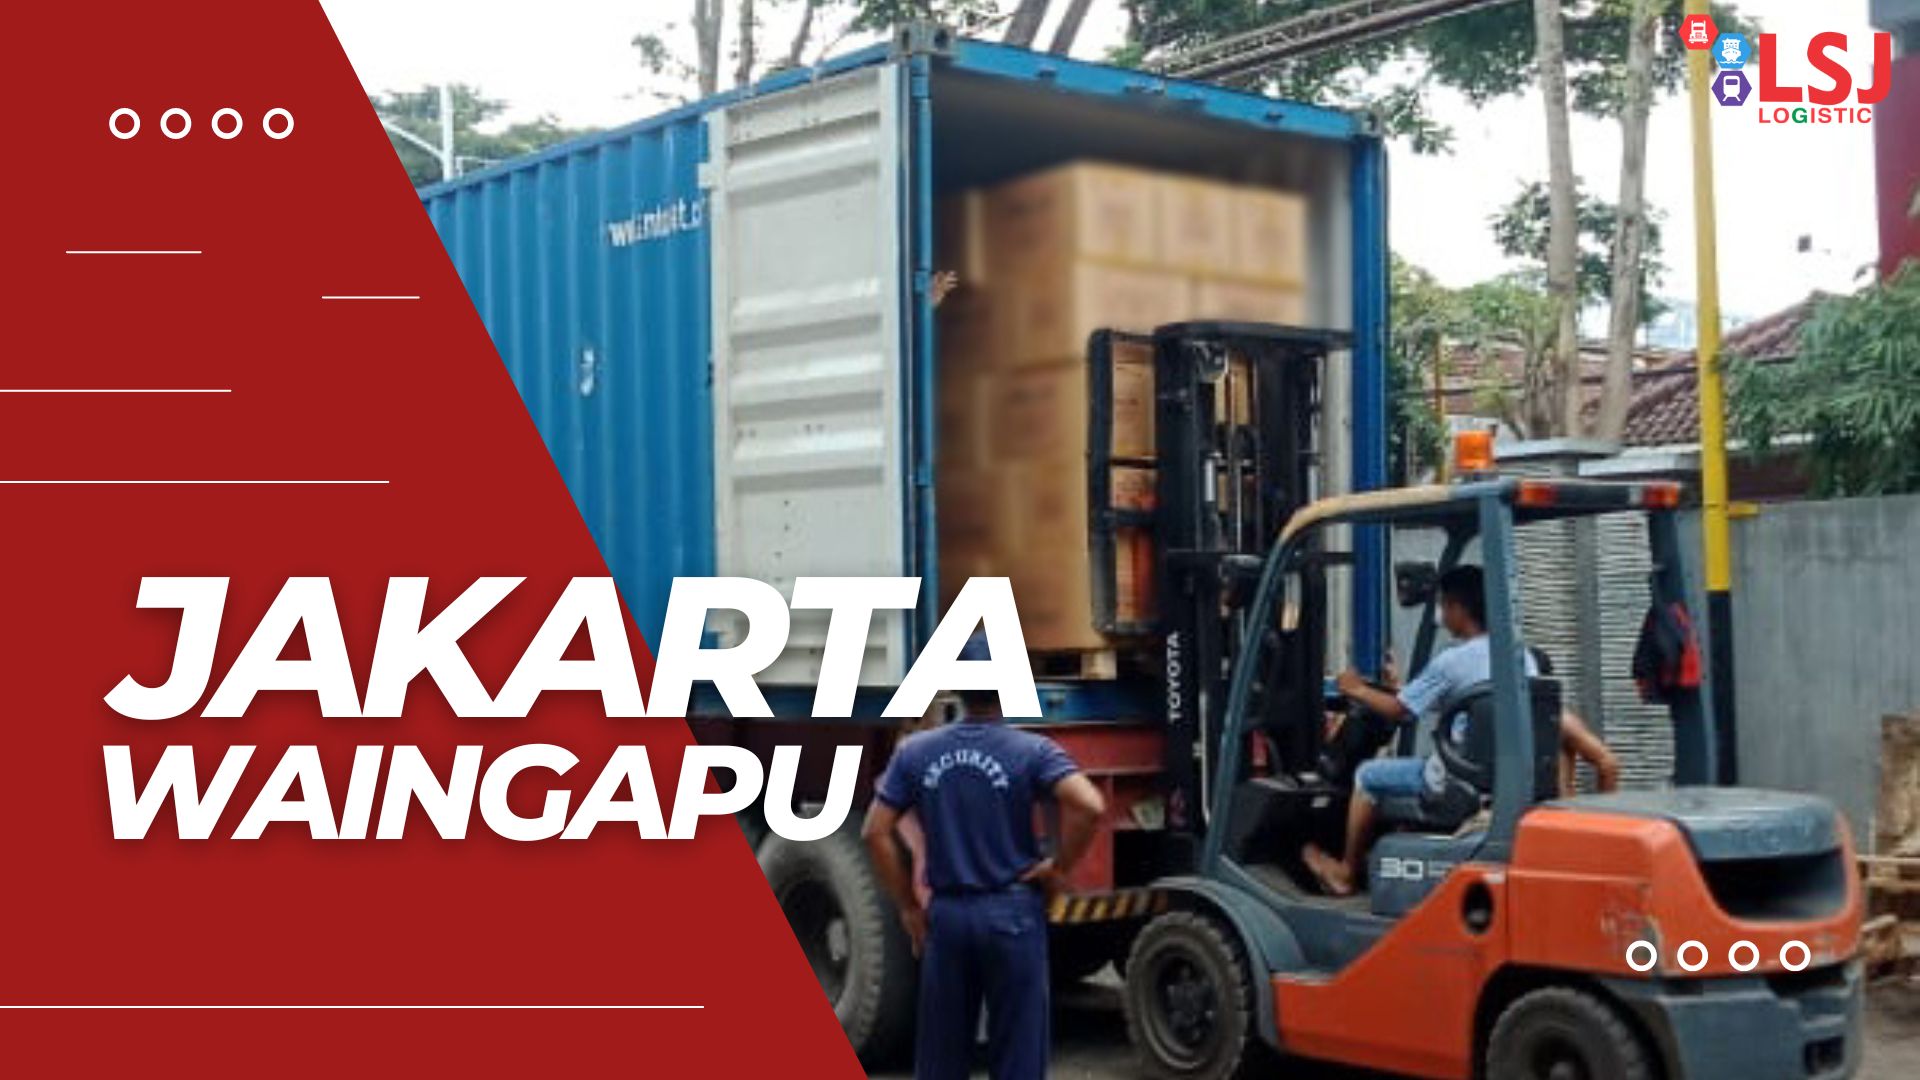 Harga Pengiriman Container Jakarta Waingapu